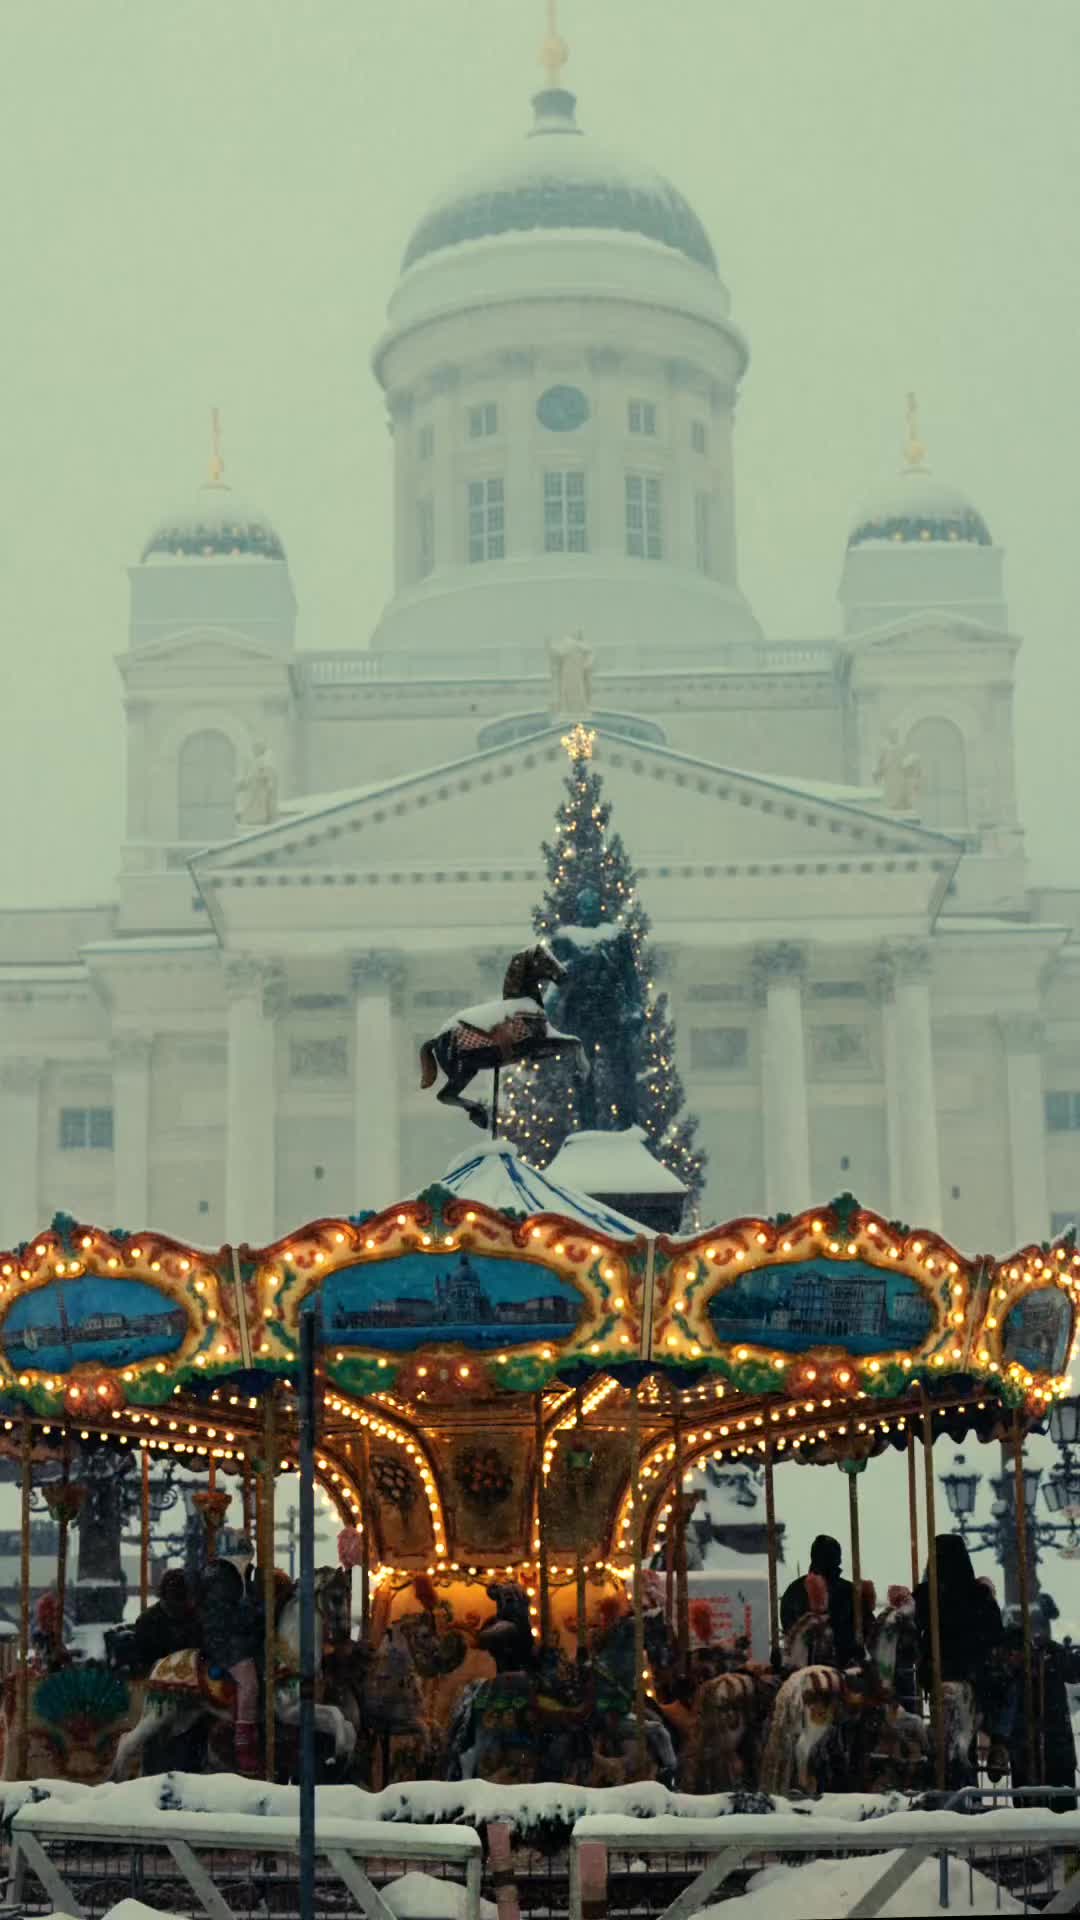 Cinematic Christmas in Helsinki - Merry Christmas All!